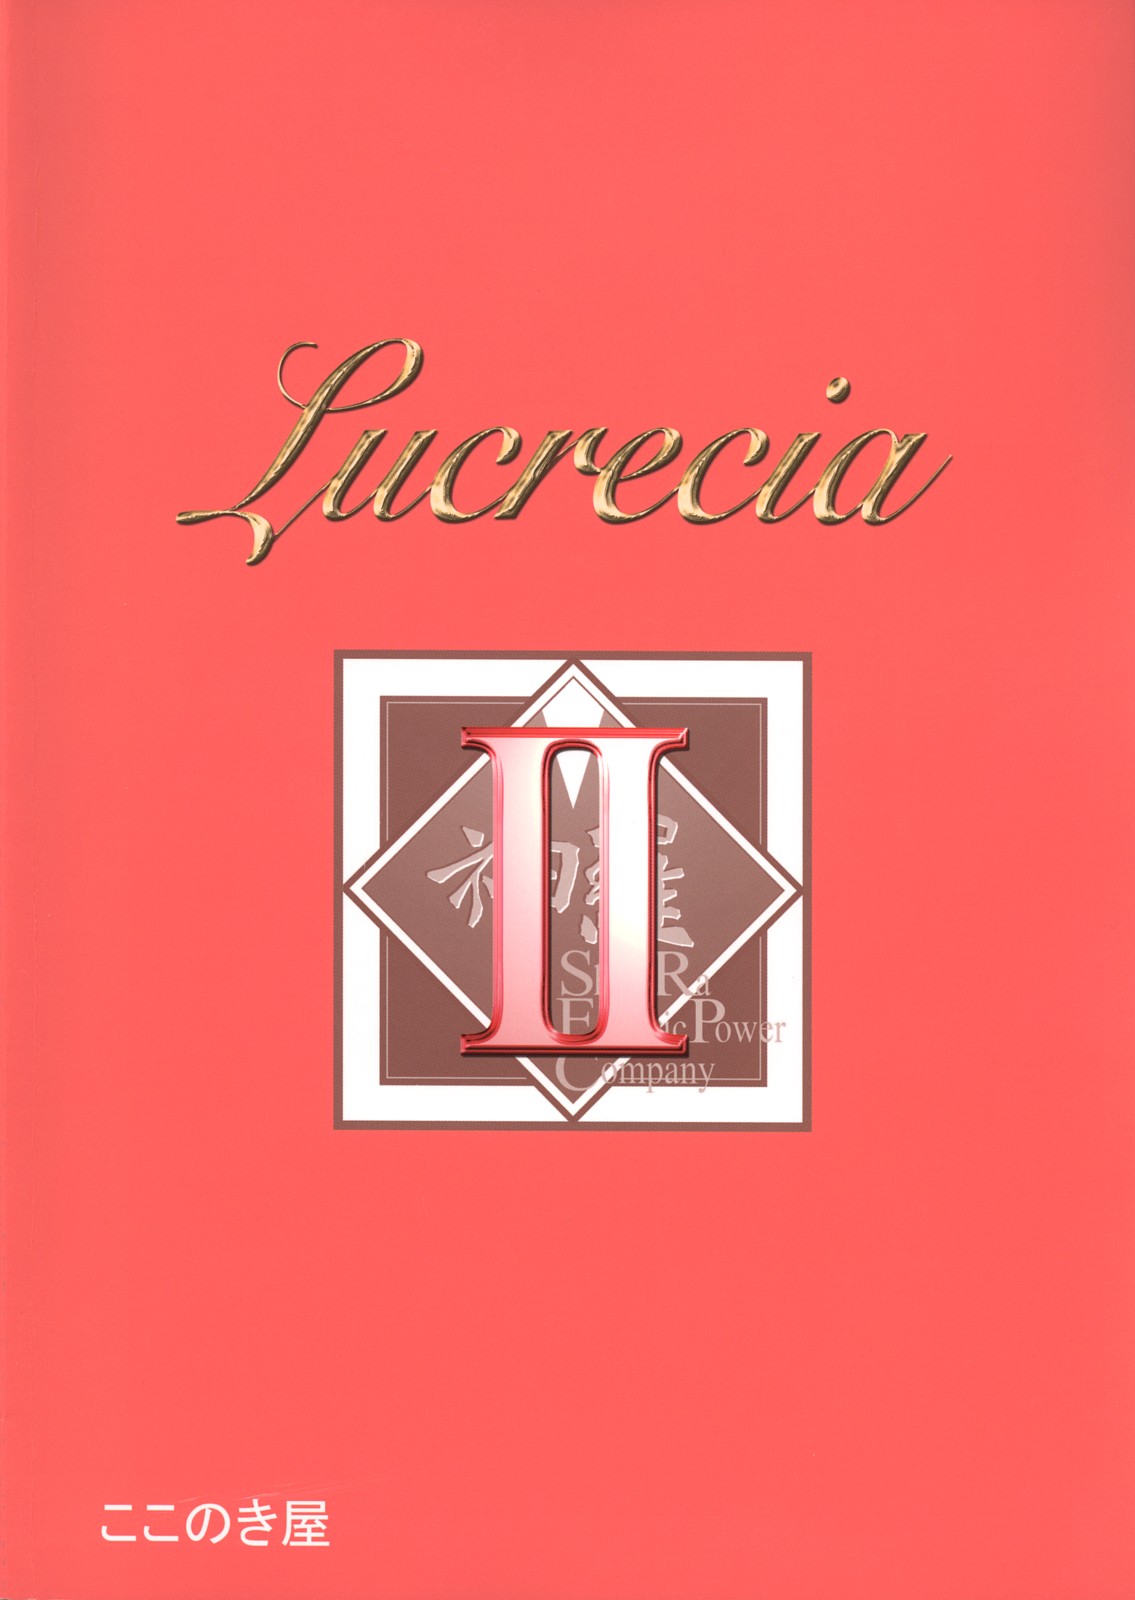 [Nao Kokonoki] Lucrecia II (Final Fantasy 7) 